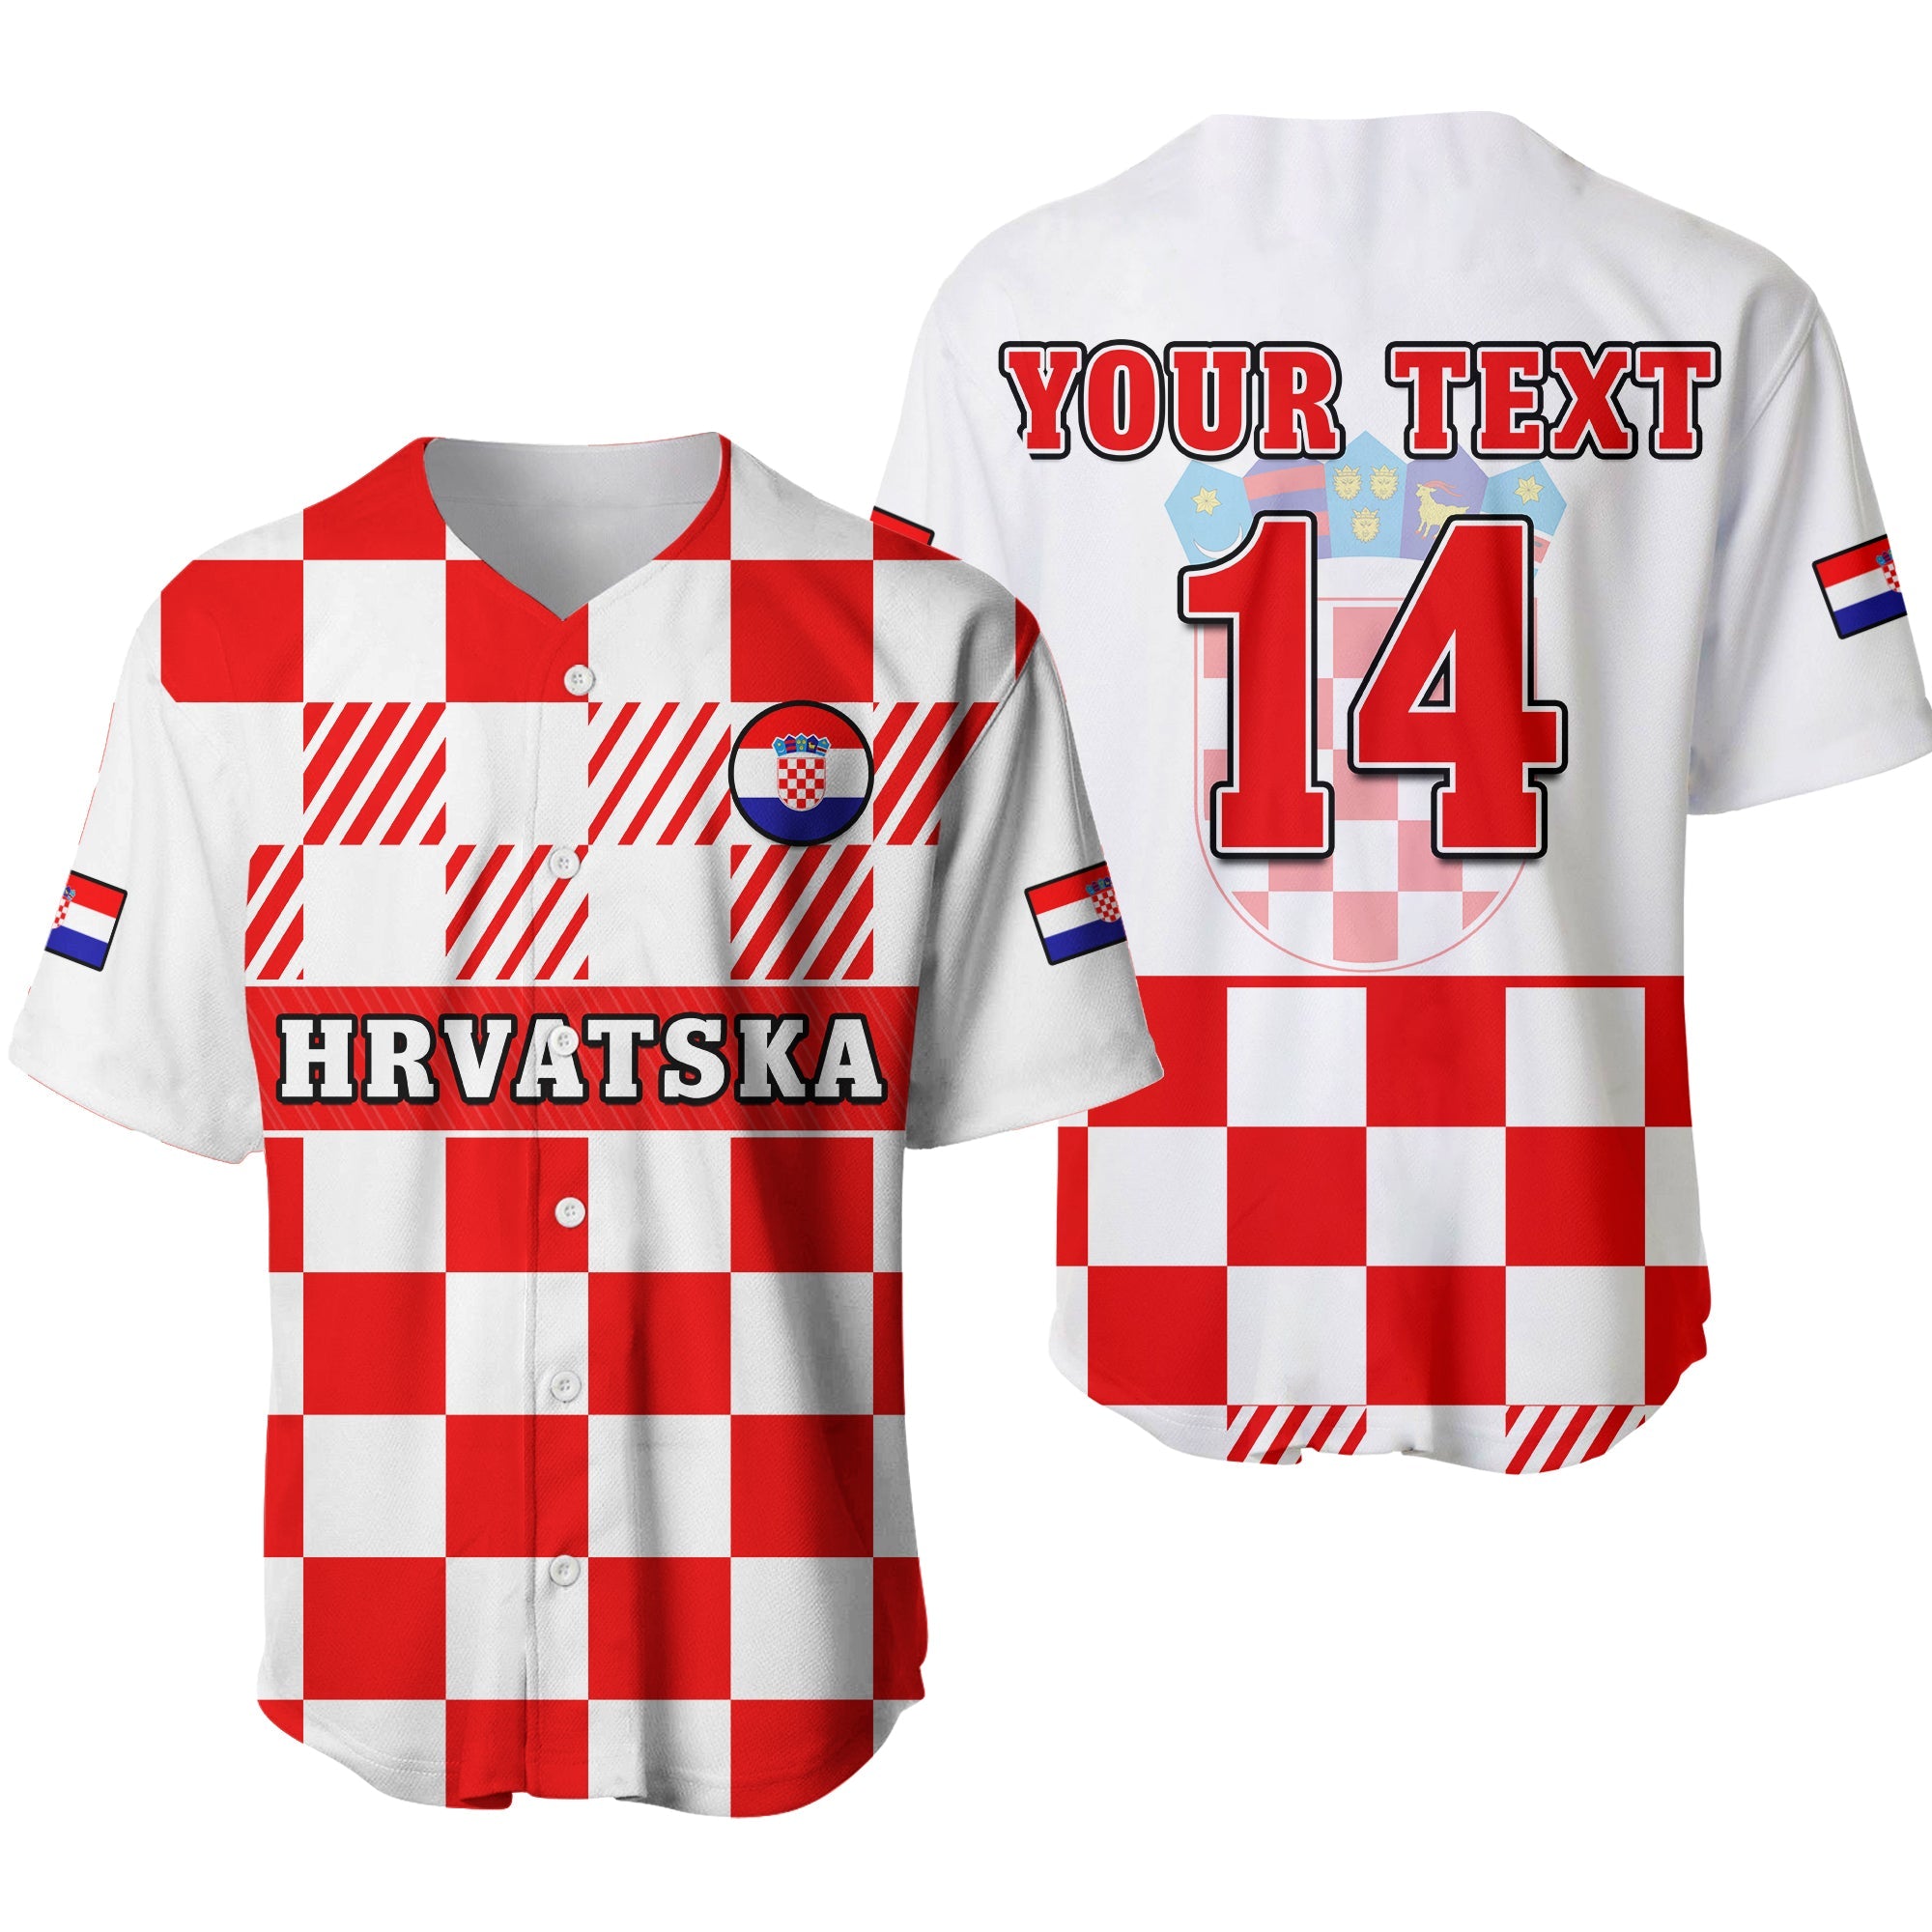 custom-text-and-number-croatia-football-baseball-jersey-hrvatska-checkerboard-red-version